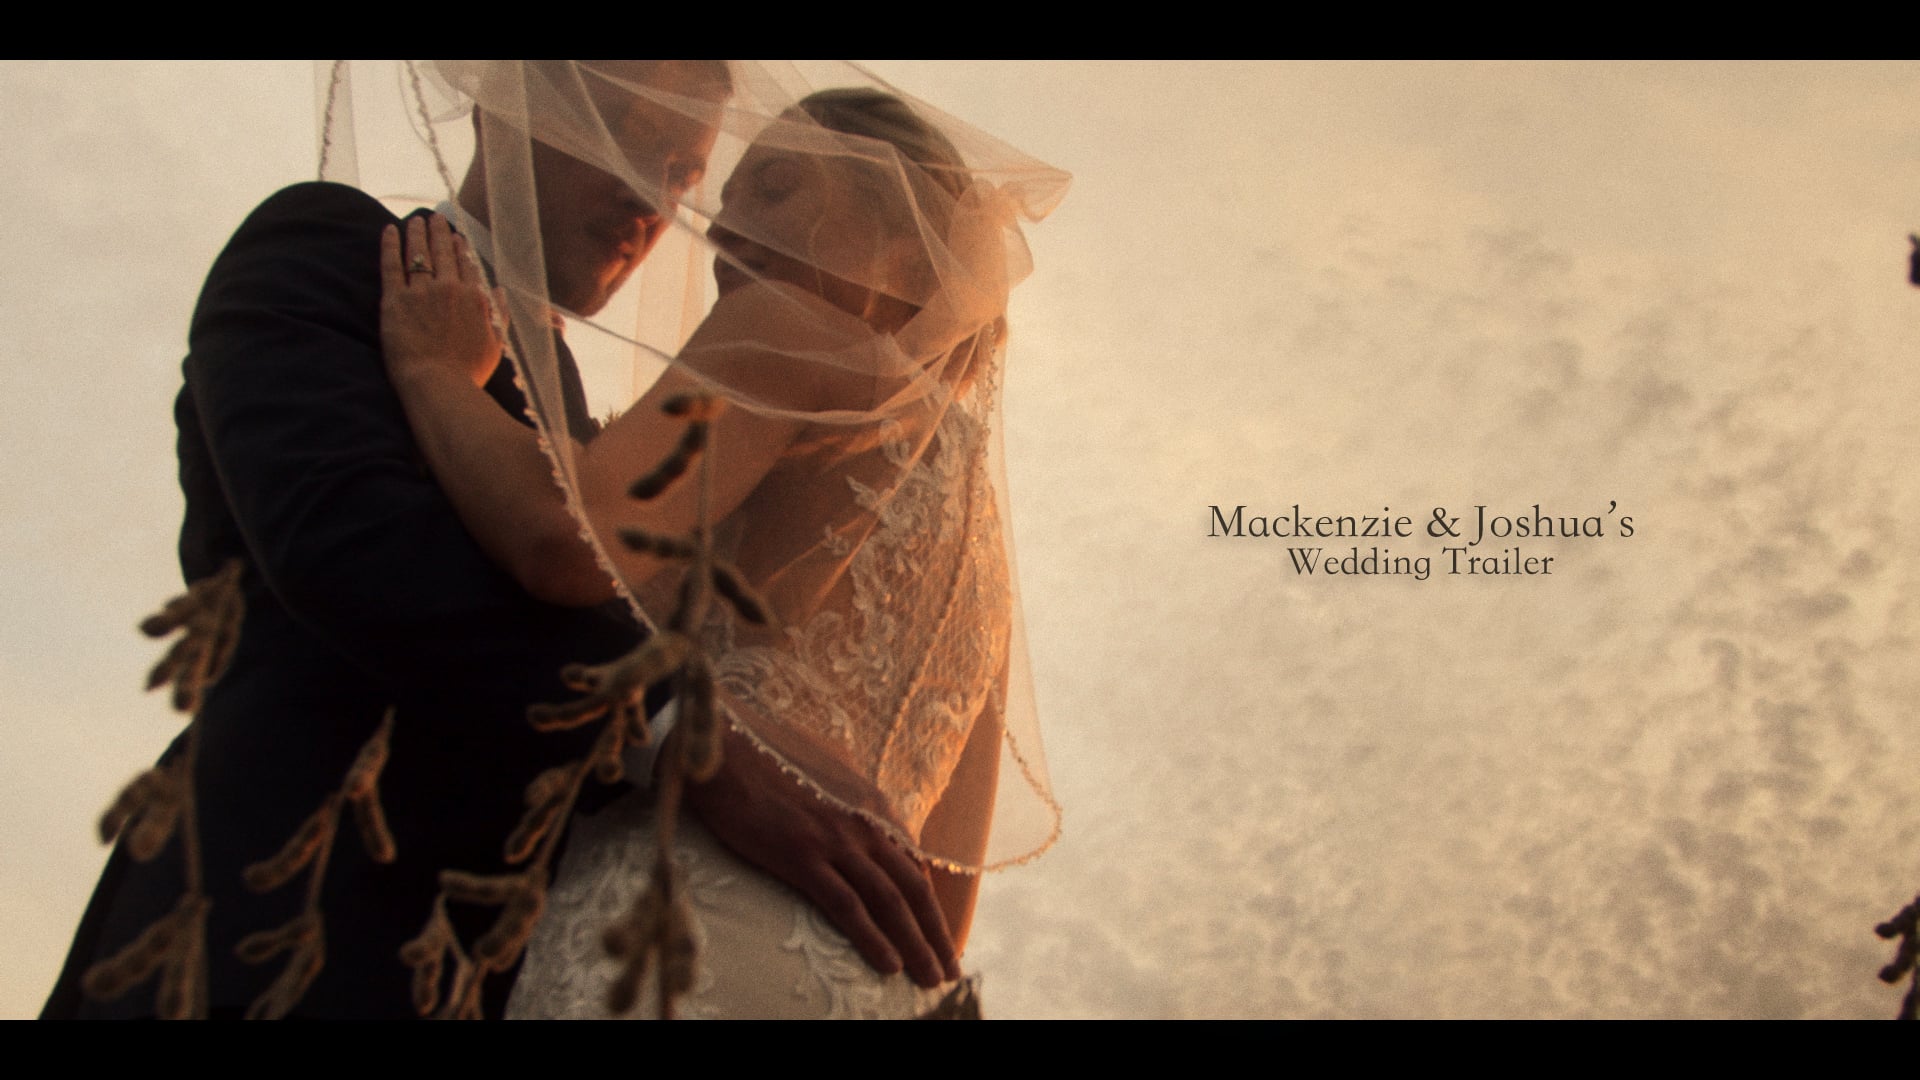 Mackenzie & Joshua's Wedding Trailer